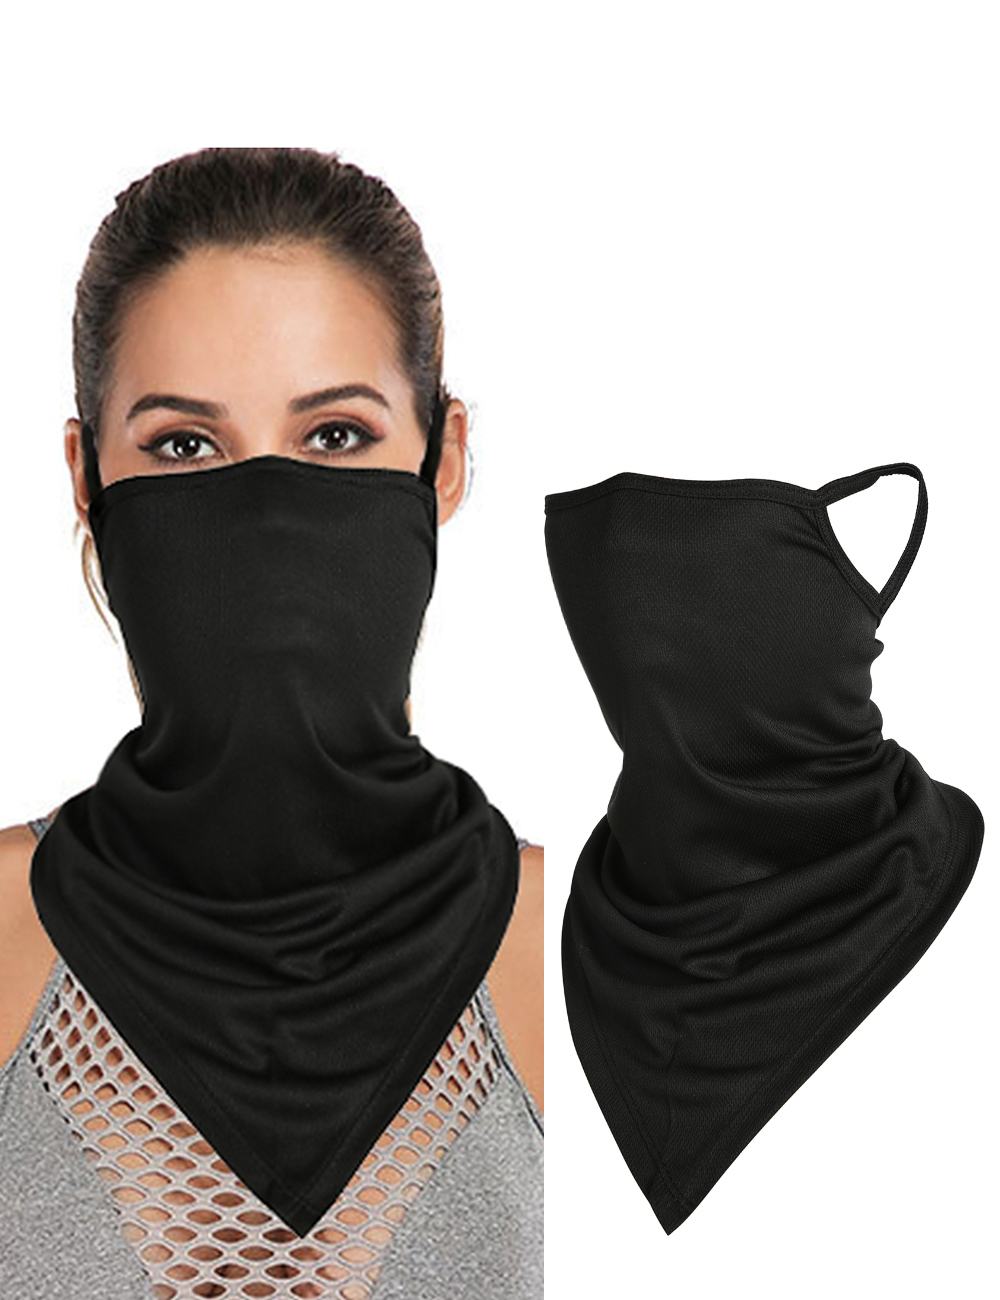 Face Scarf Women Men for Dust Wind Sun Protection American Flag Neck Gaiter Balaclava Bandana Headwear